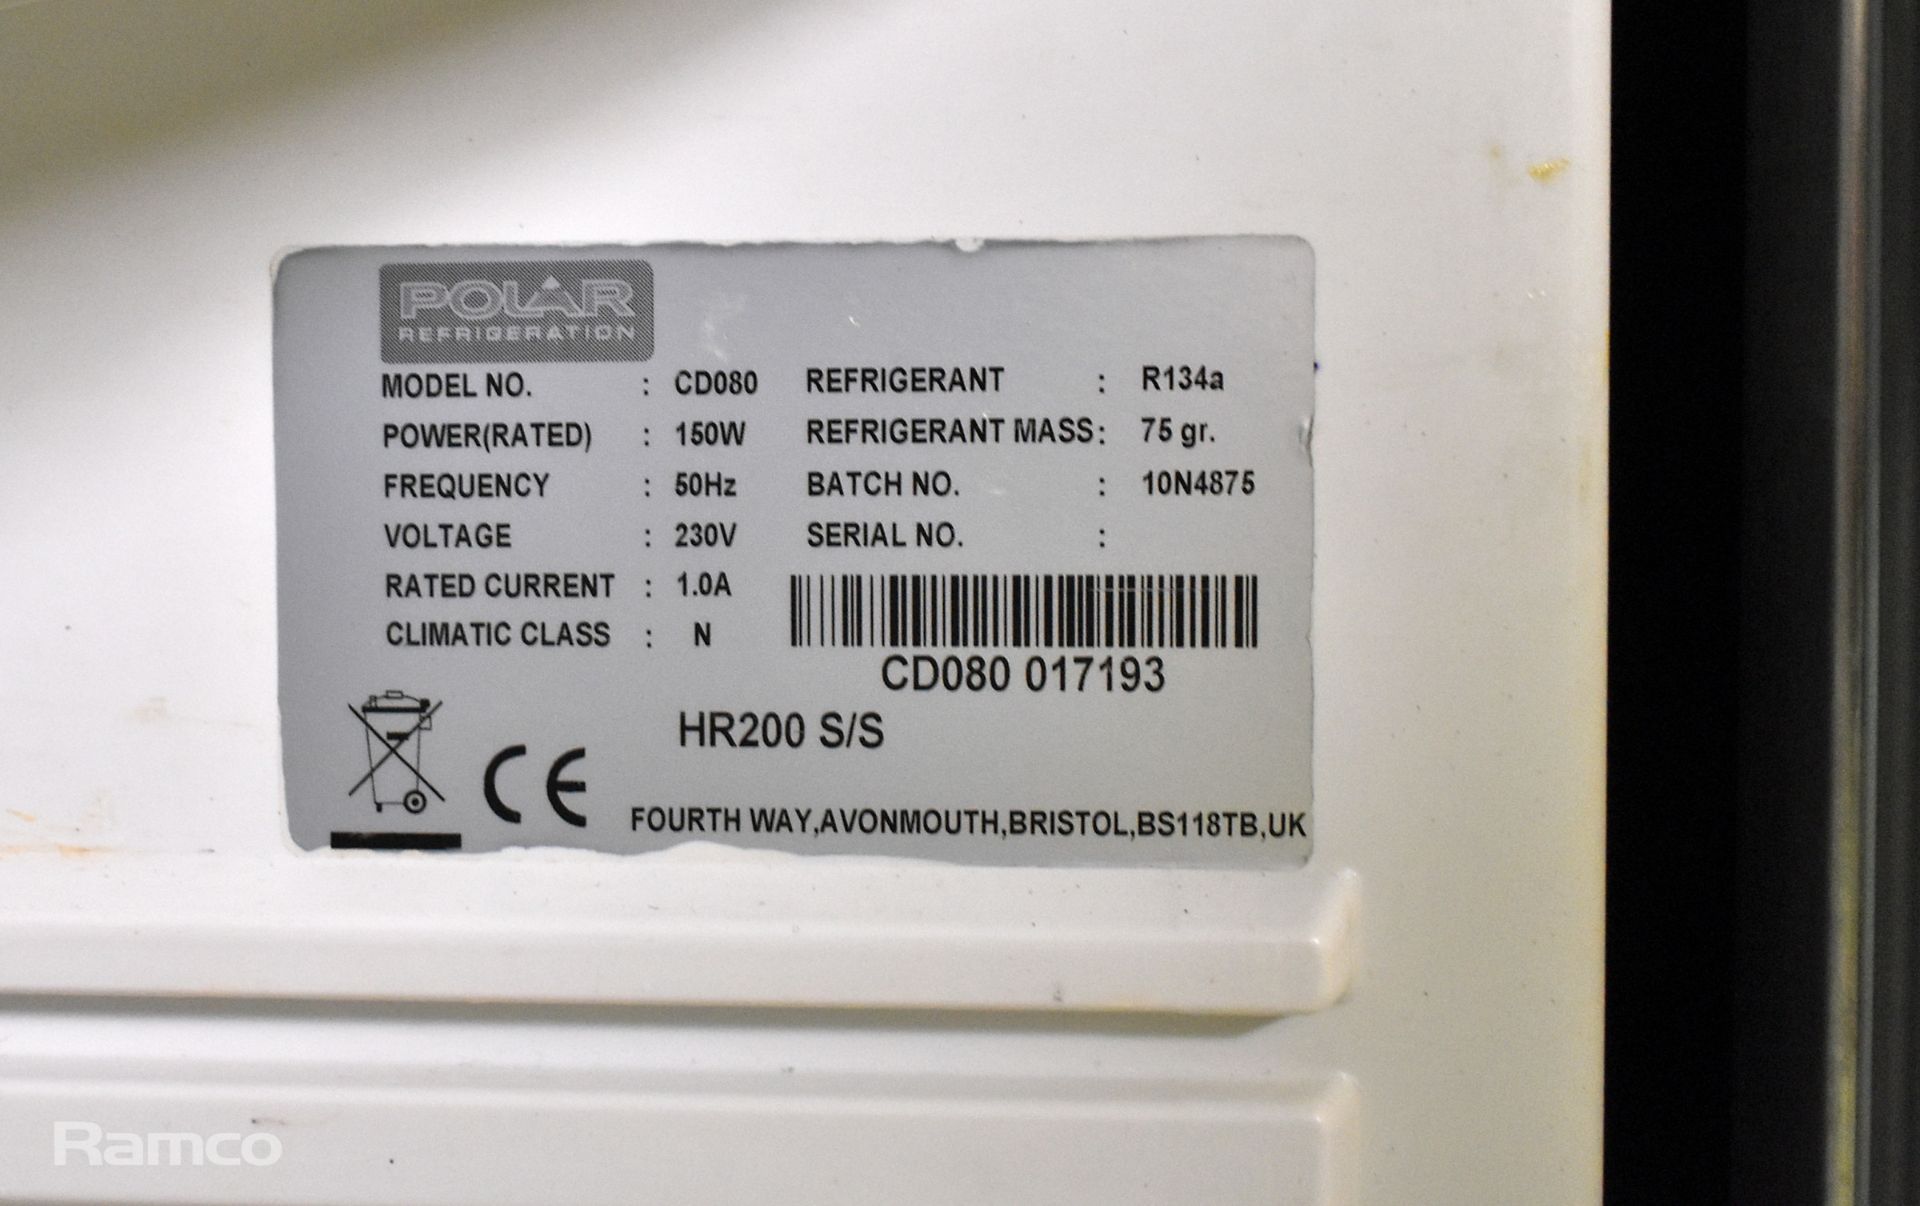 Polar CD080 undercounter fridge - W 600 x D 590 x H 840mm - Image 4 of 5